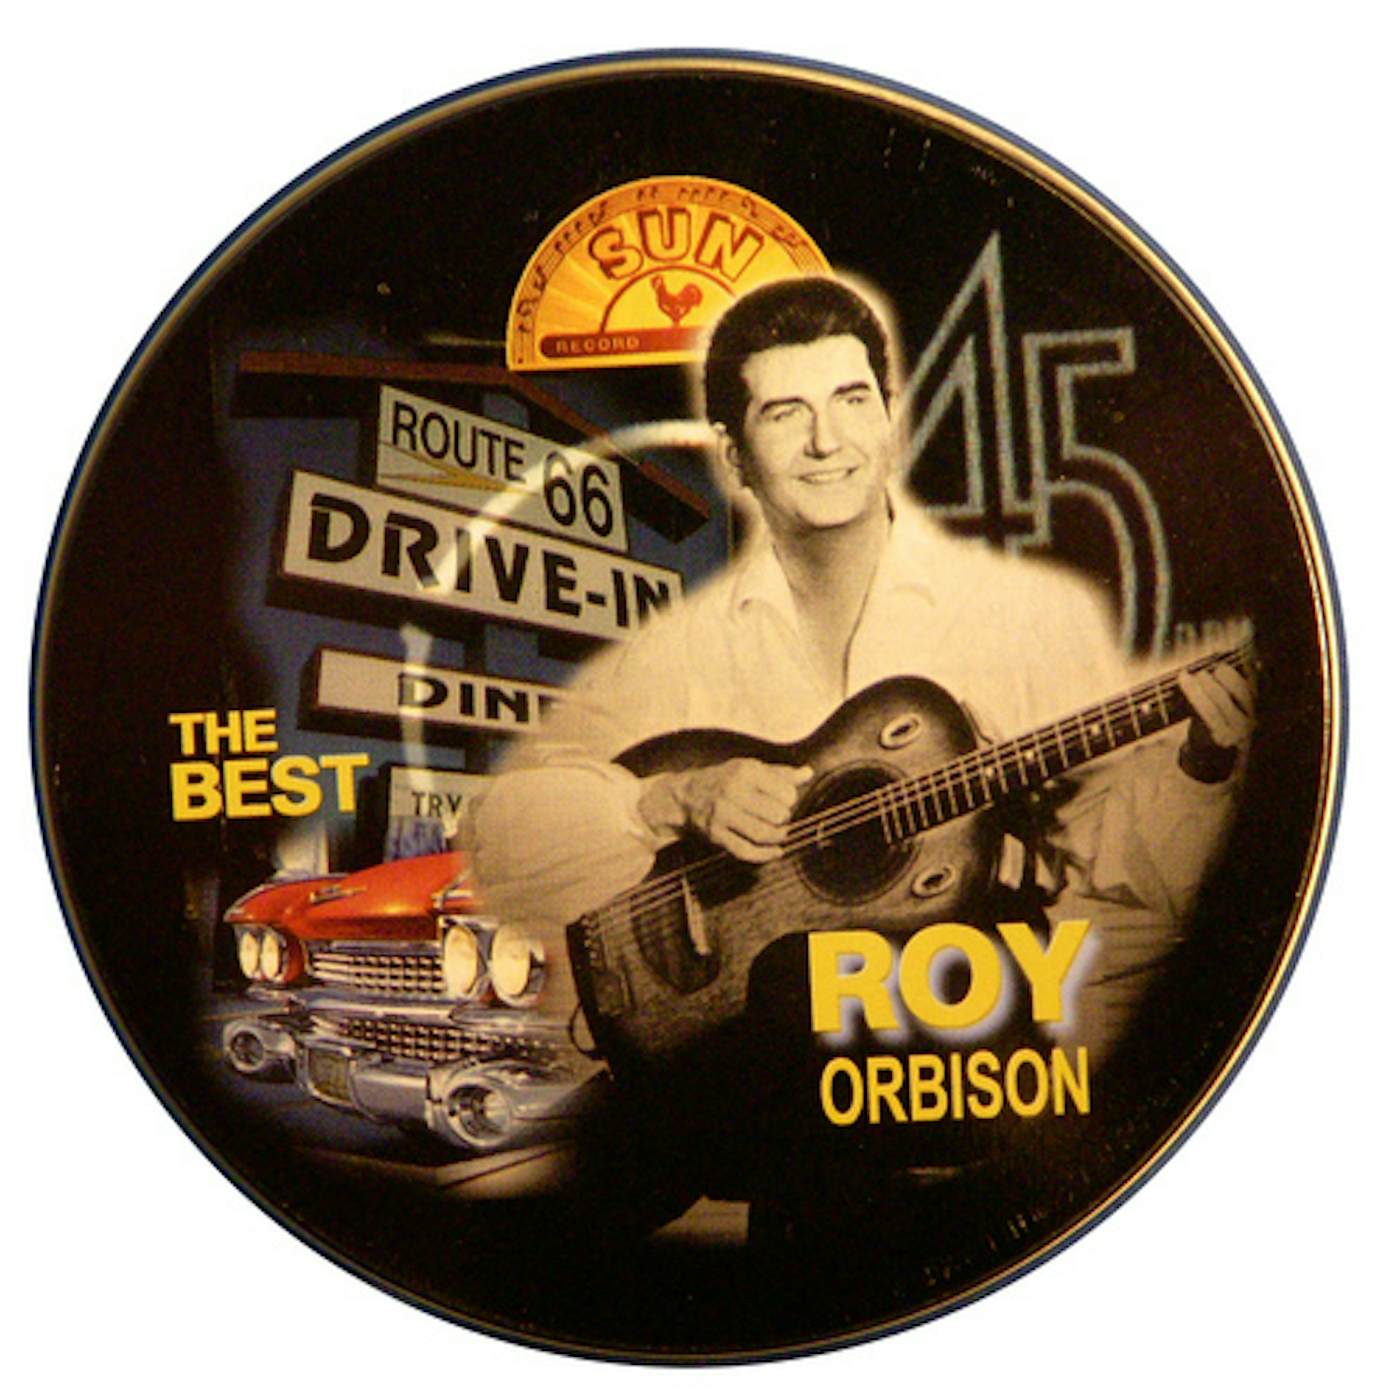 Roy Orbison - The Best CD Tin